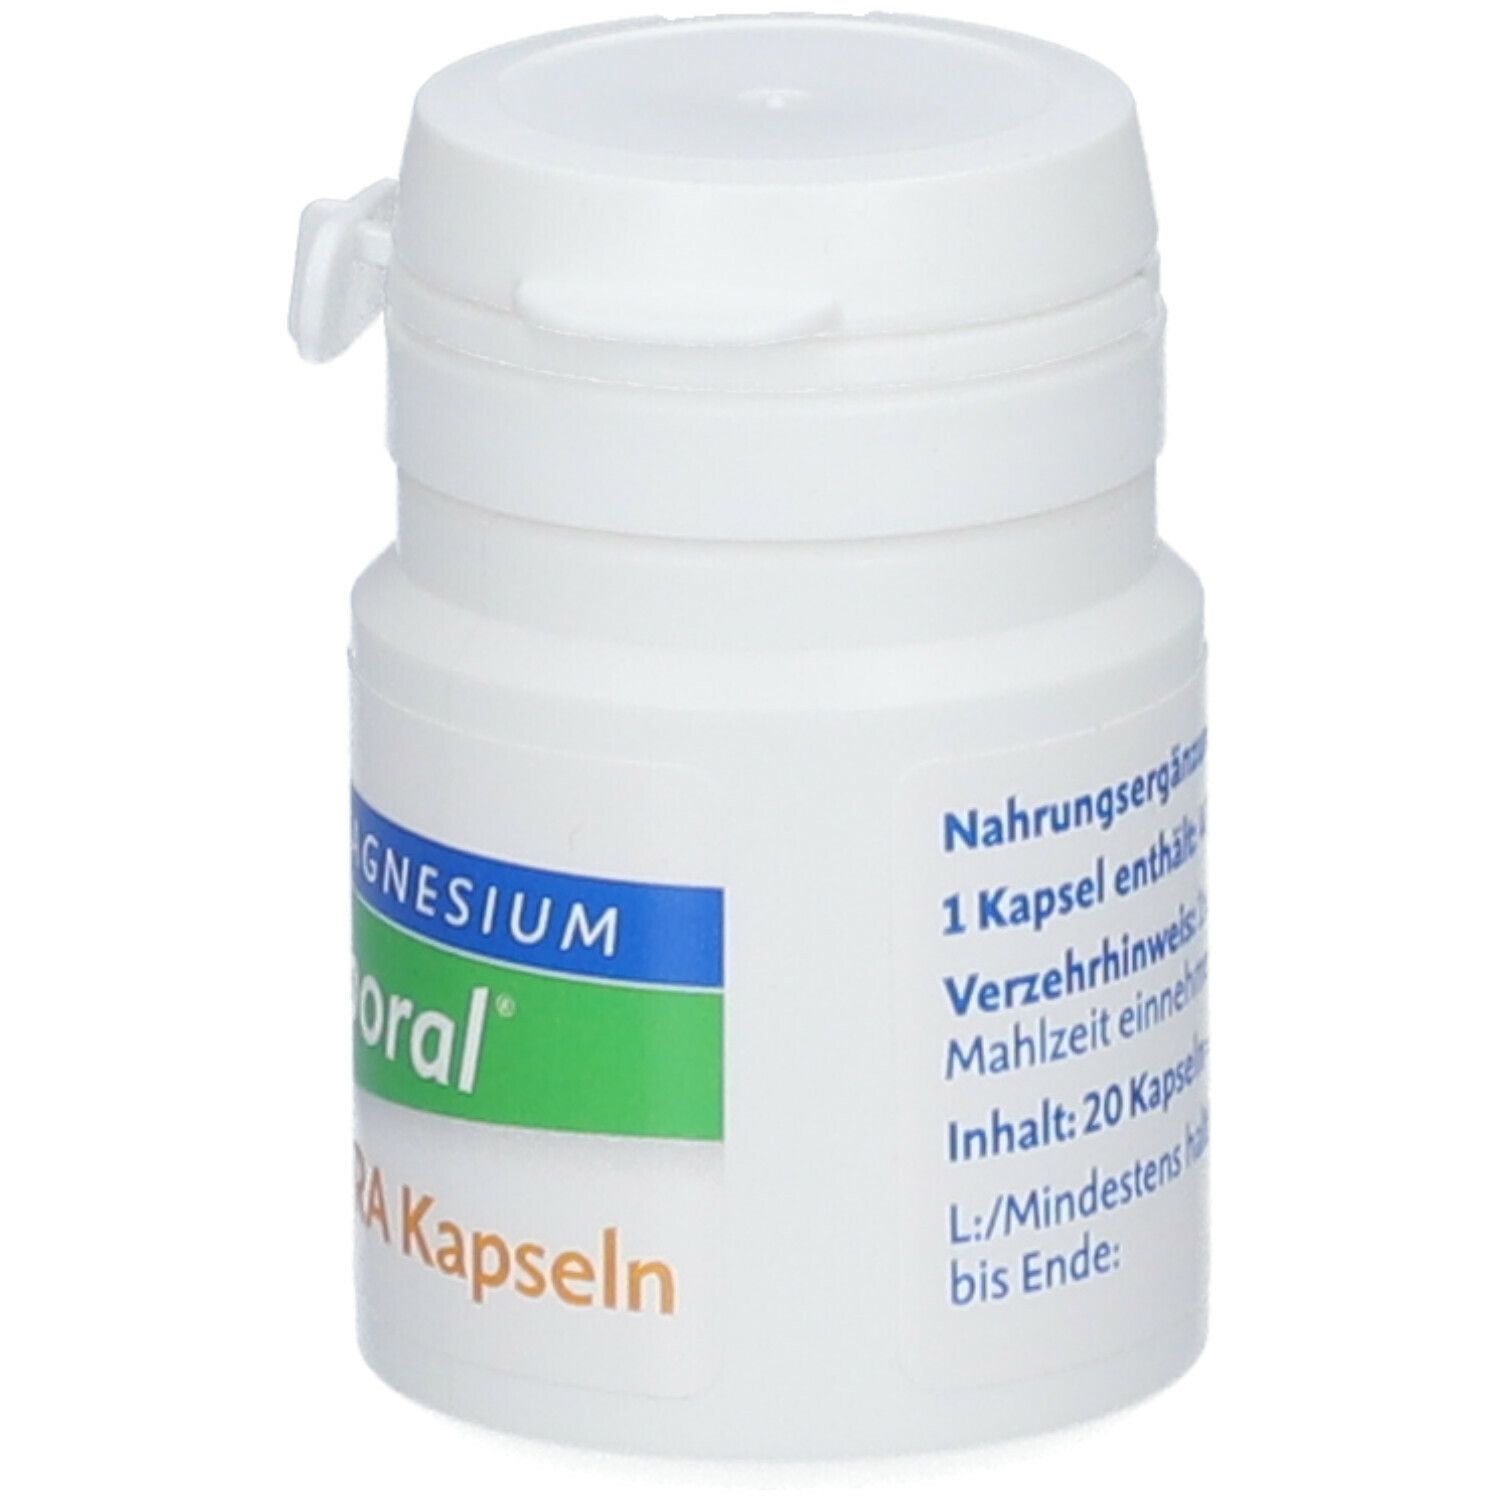 Magnesium-Diasporal® 400 EXTRA Kapseln